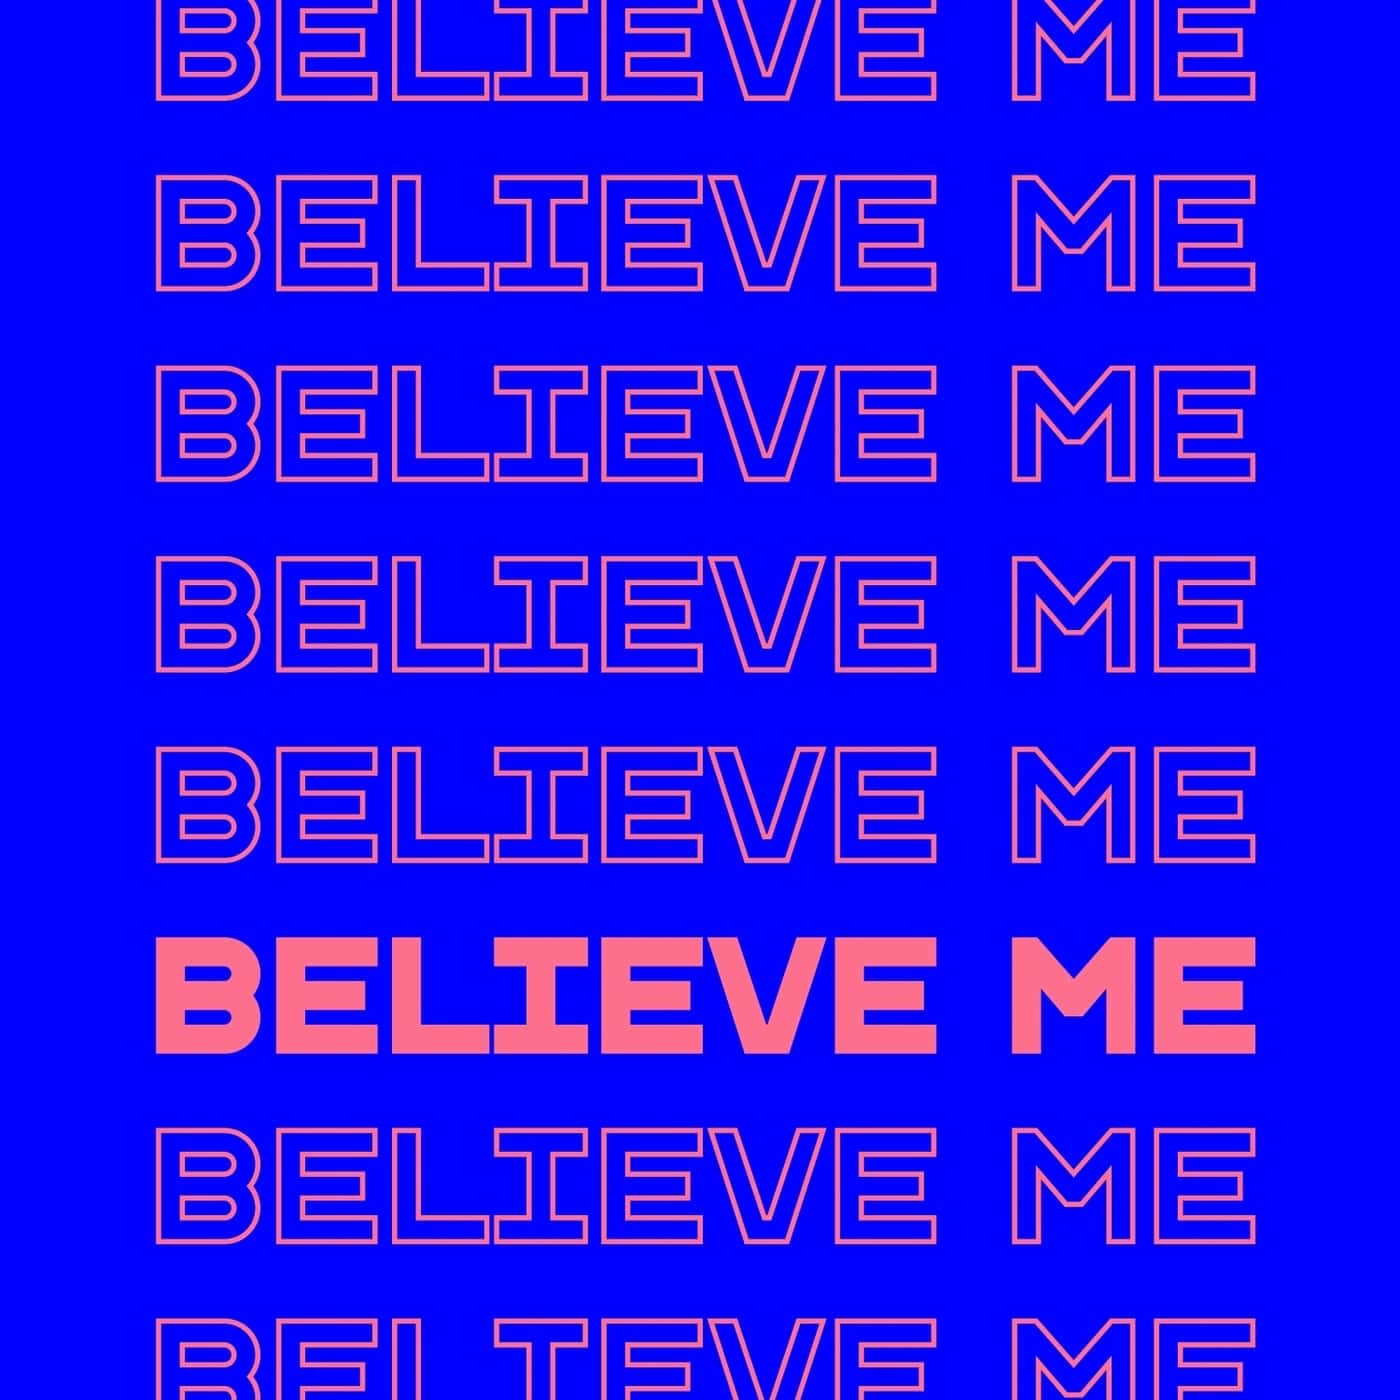 image cover: Dennis Beutler, Elternhouse - Believe Me / GU669